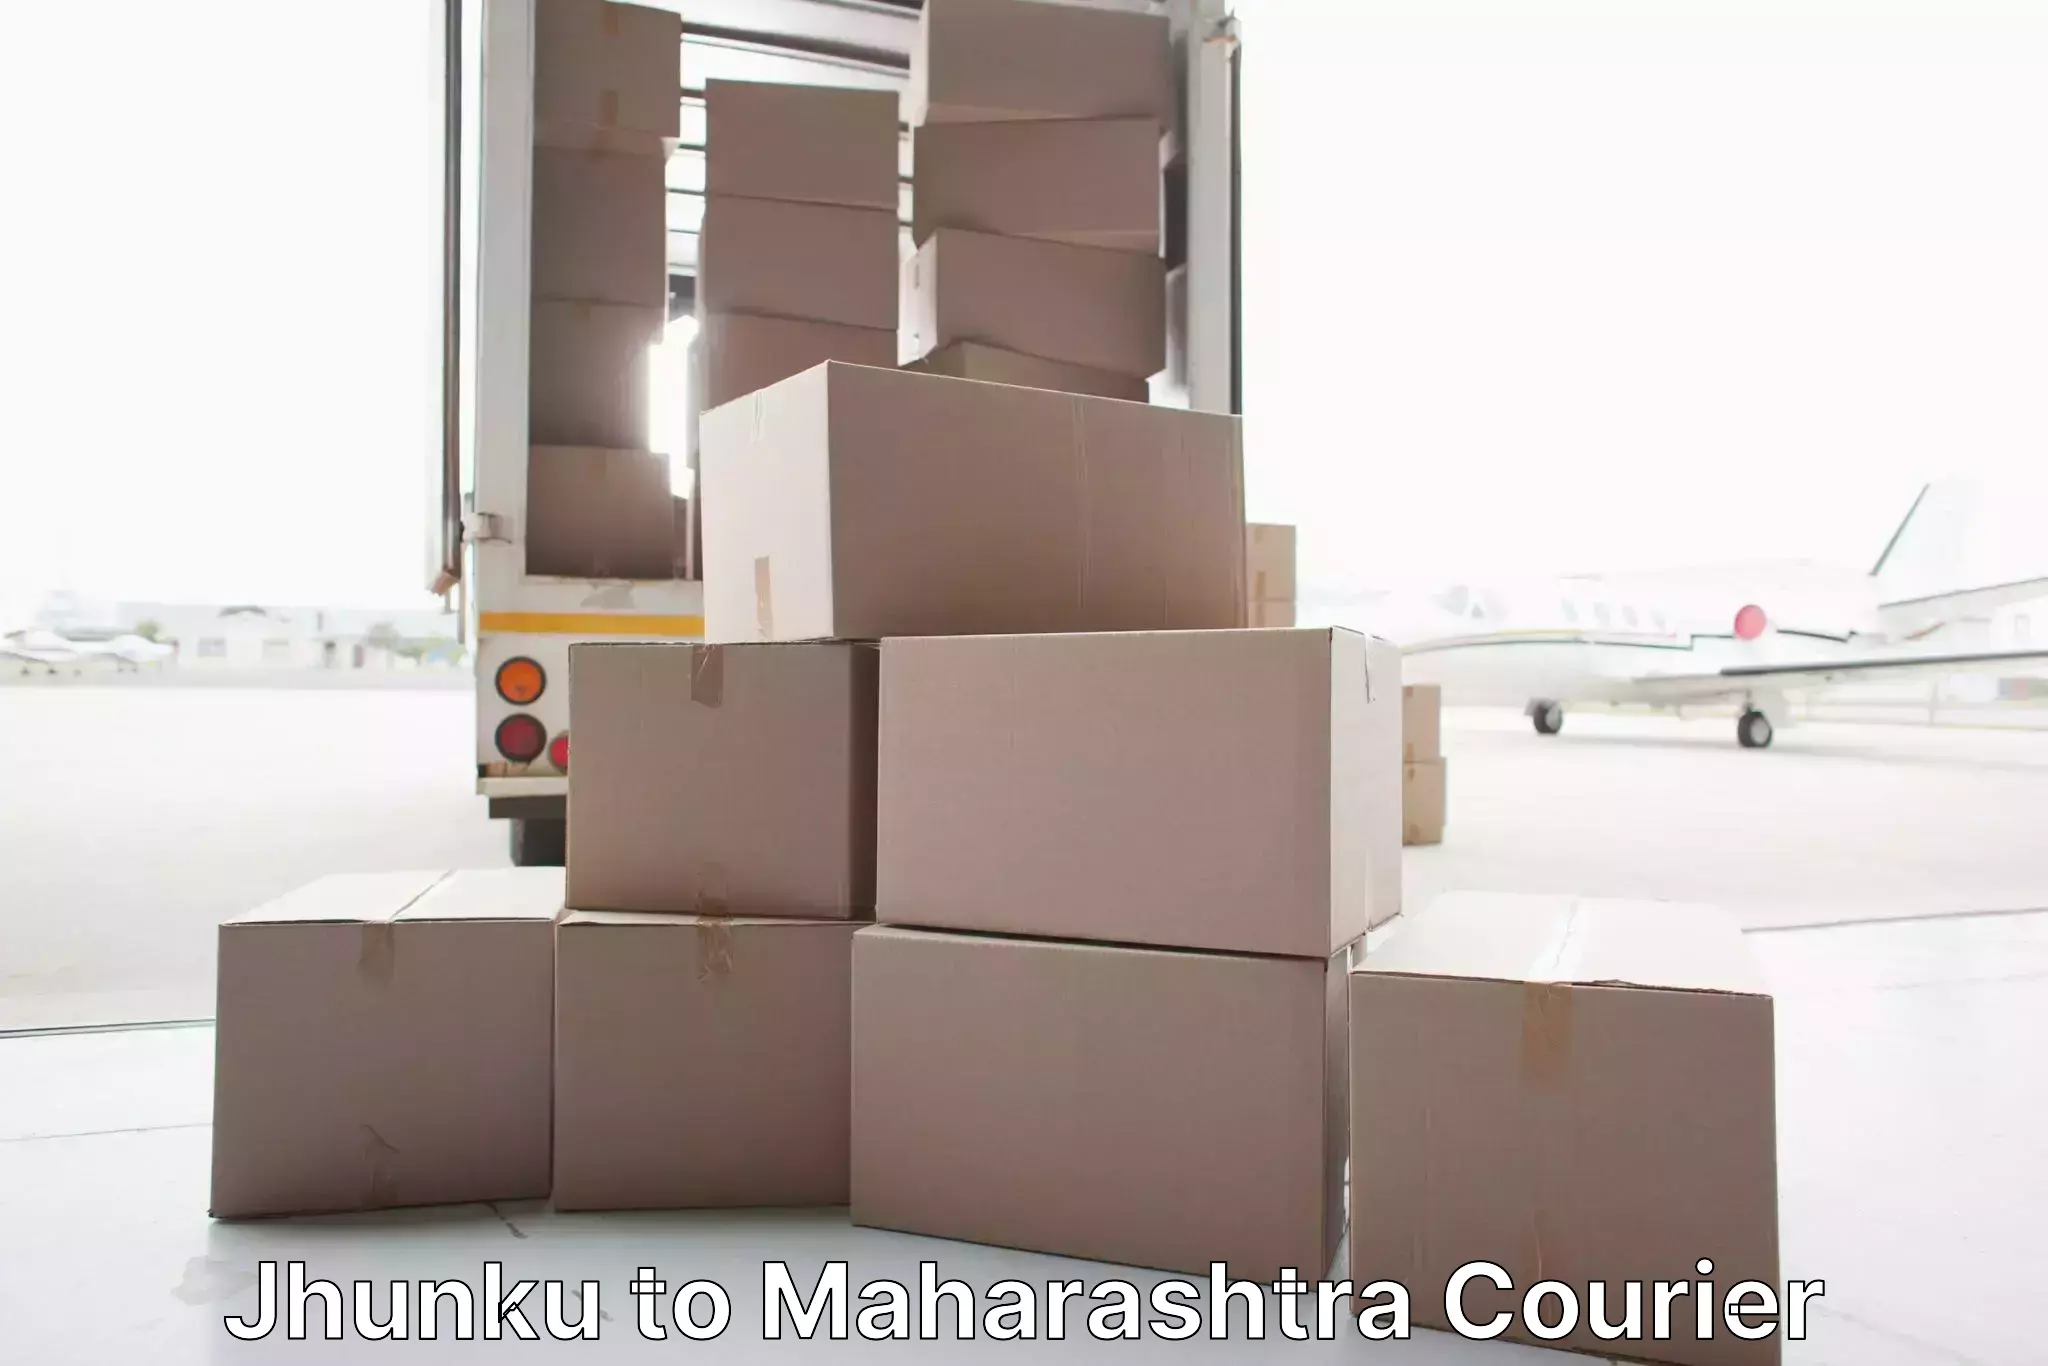 Home goods moving company Jhunku to Wardha